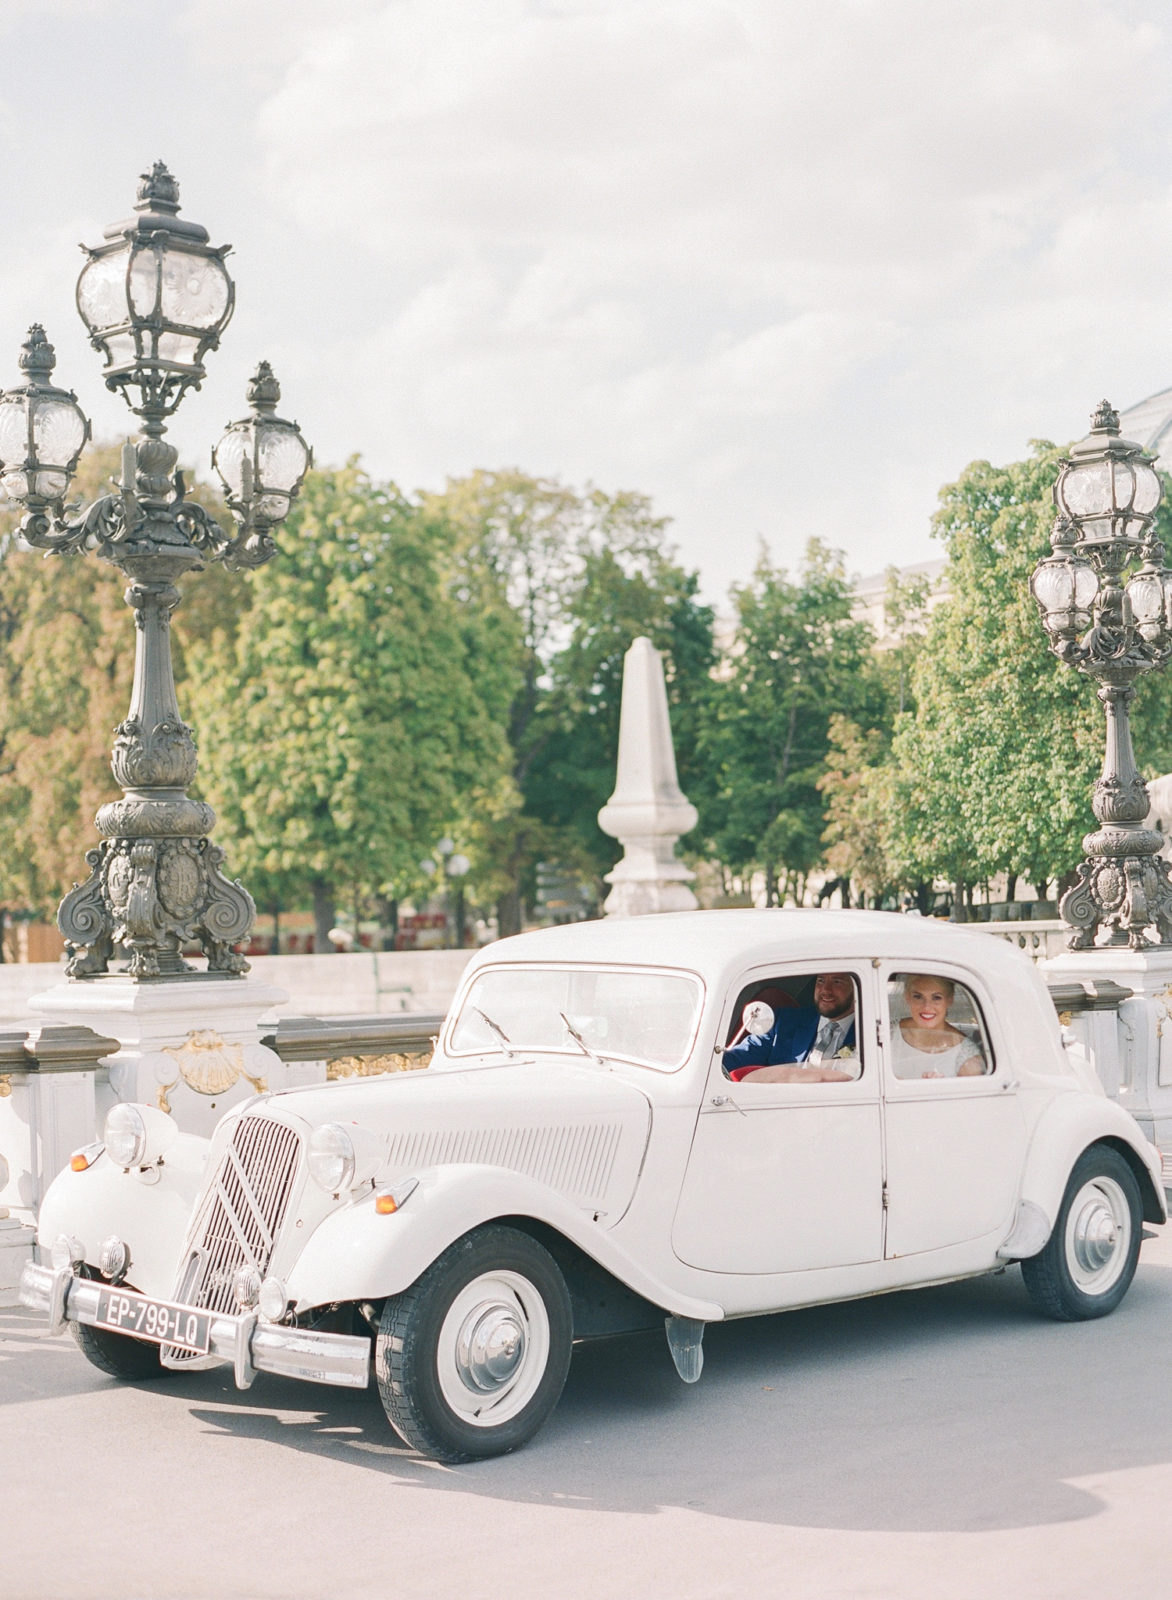 Paris Elopement Photographer | France Wedding Photographer | Destination Wedding | Film Photography | Molly Carr Photography